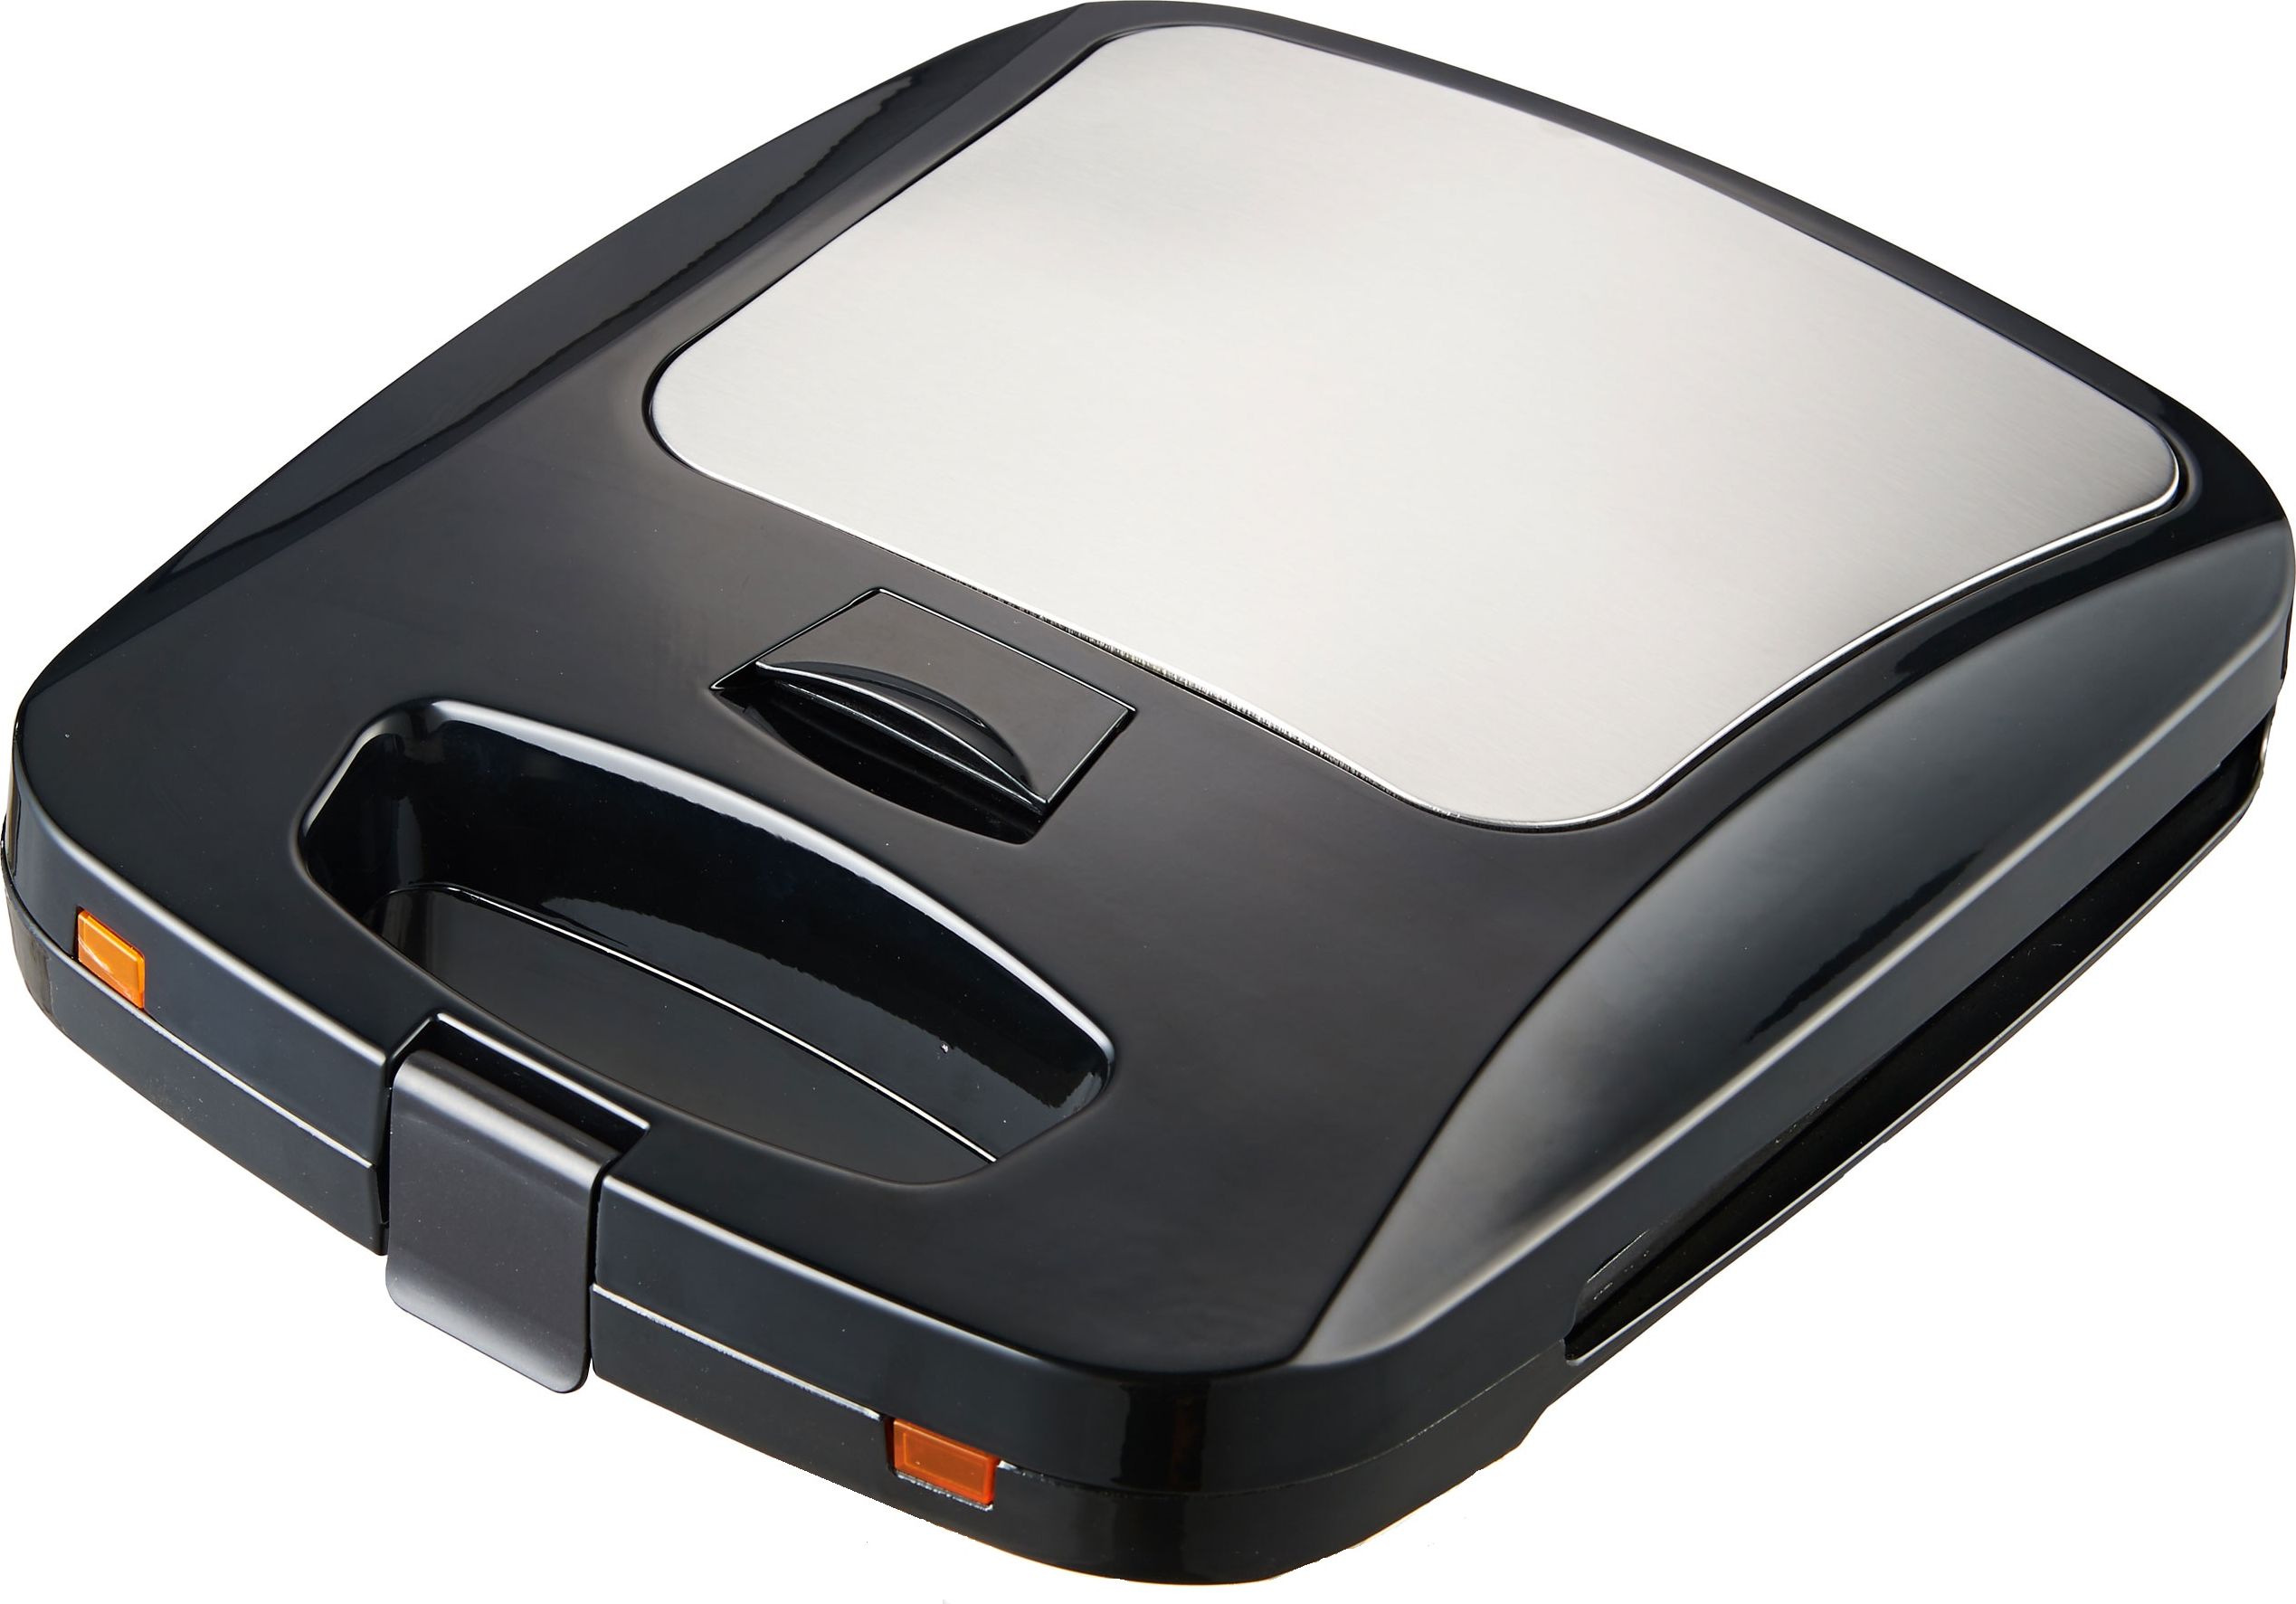 Ravanson OP-7050 (1200W; black color) Toaster 3 in 1 Tosteris